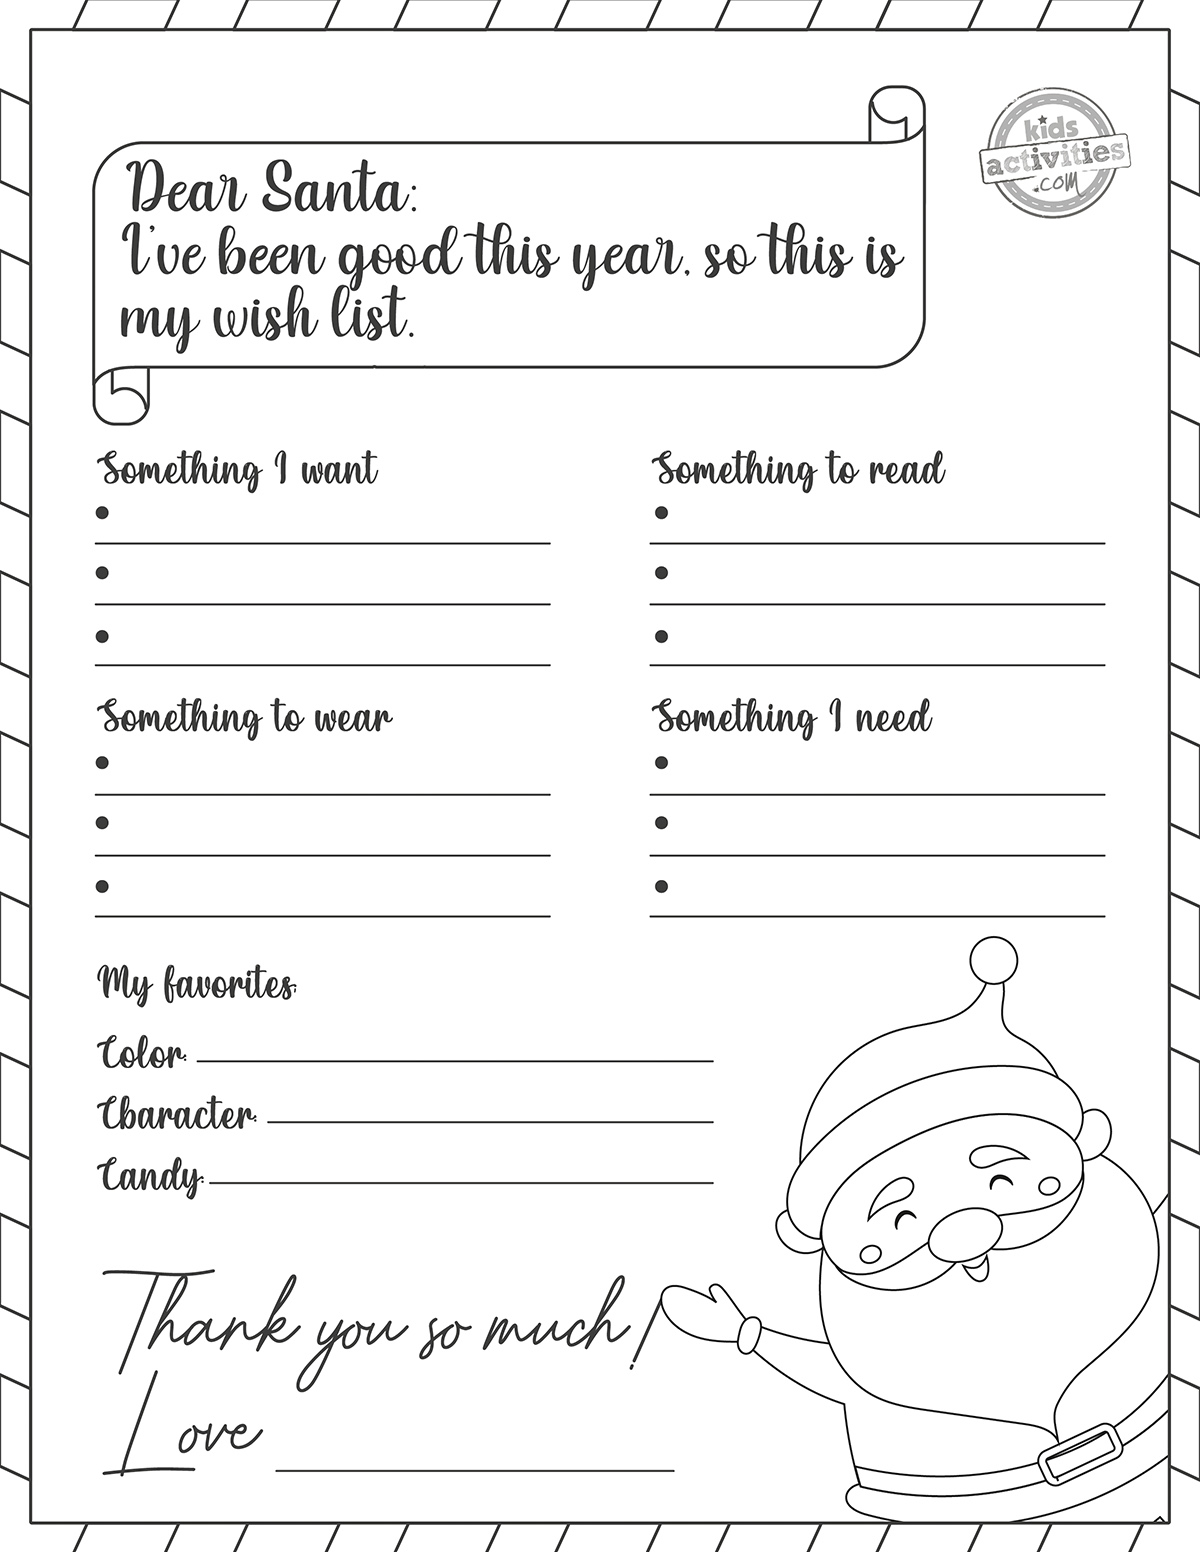 Free santa wish list printable for kids kids activities blog